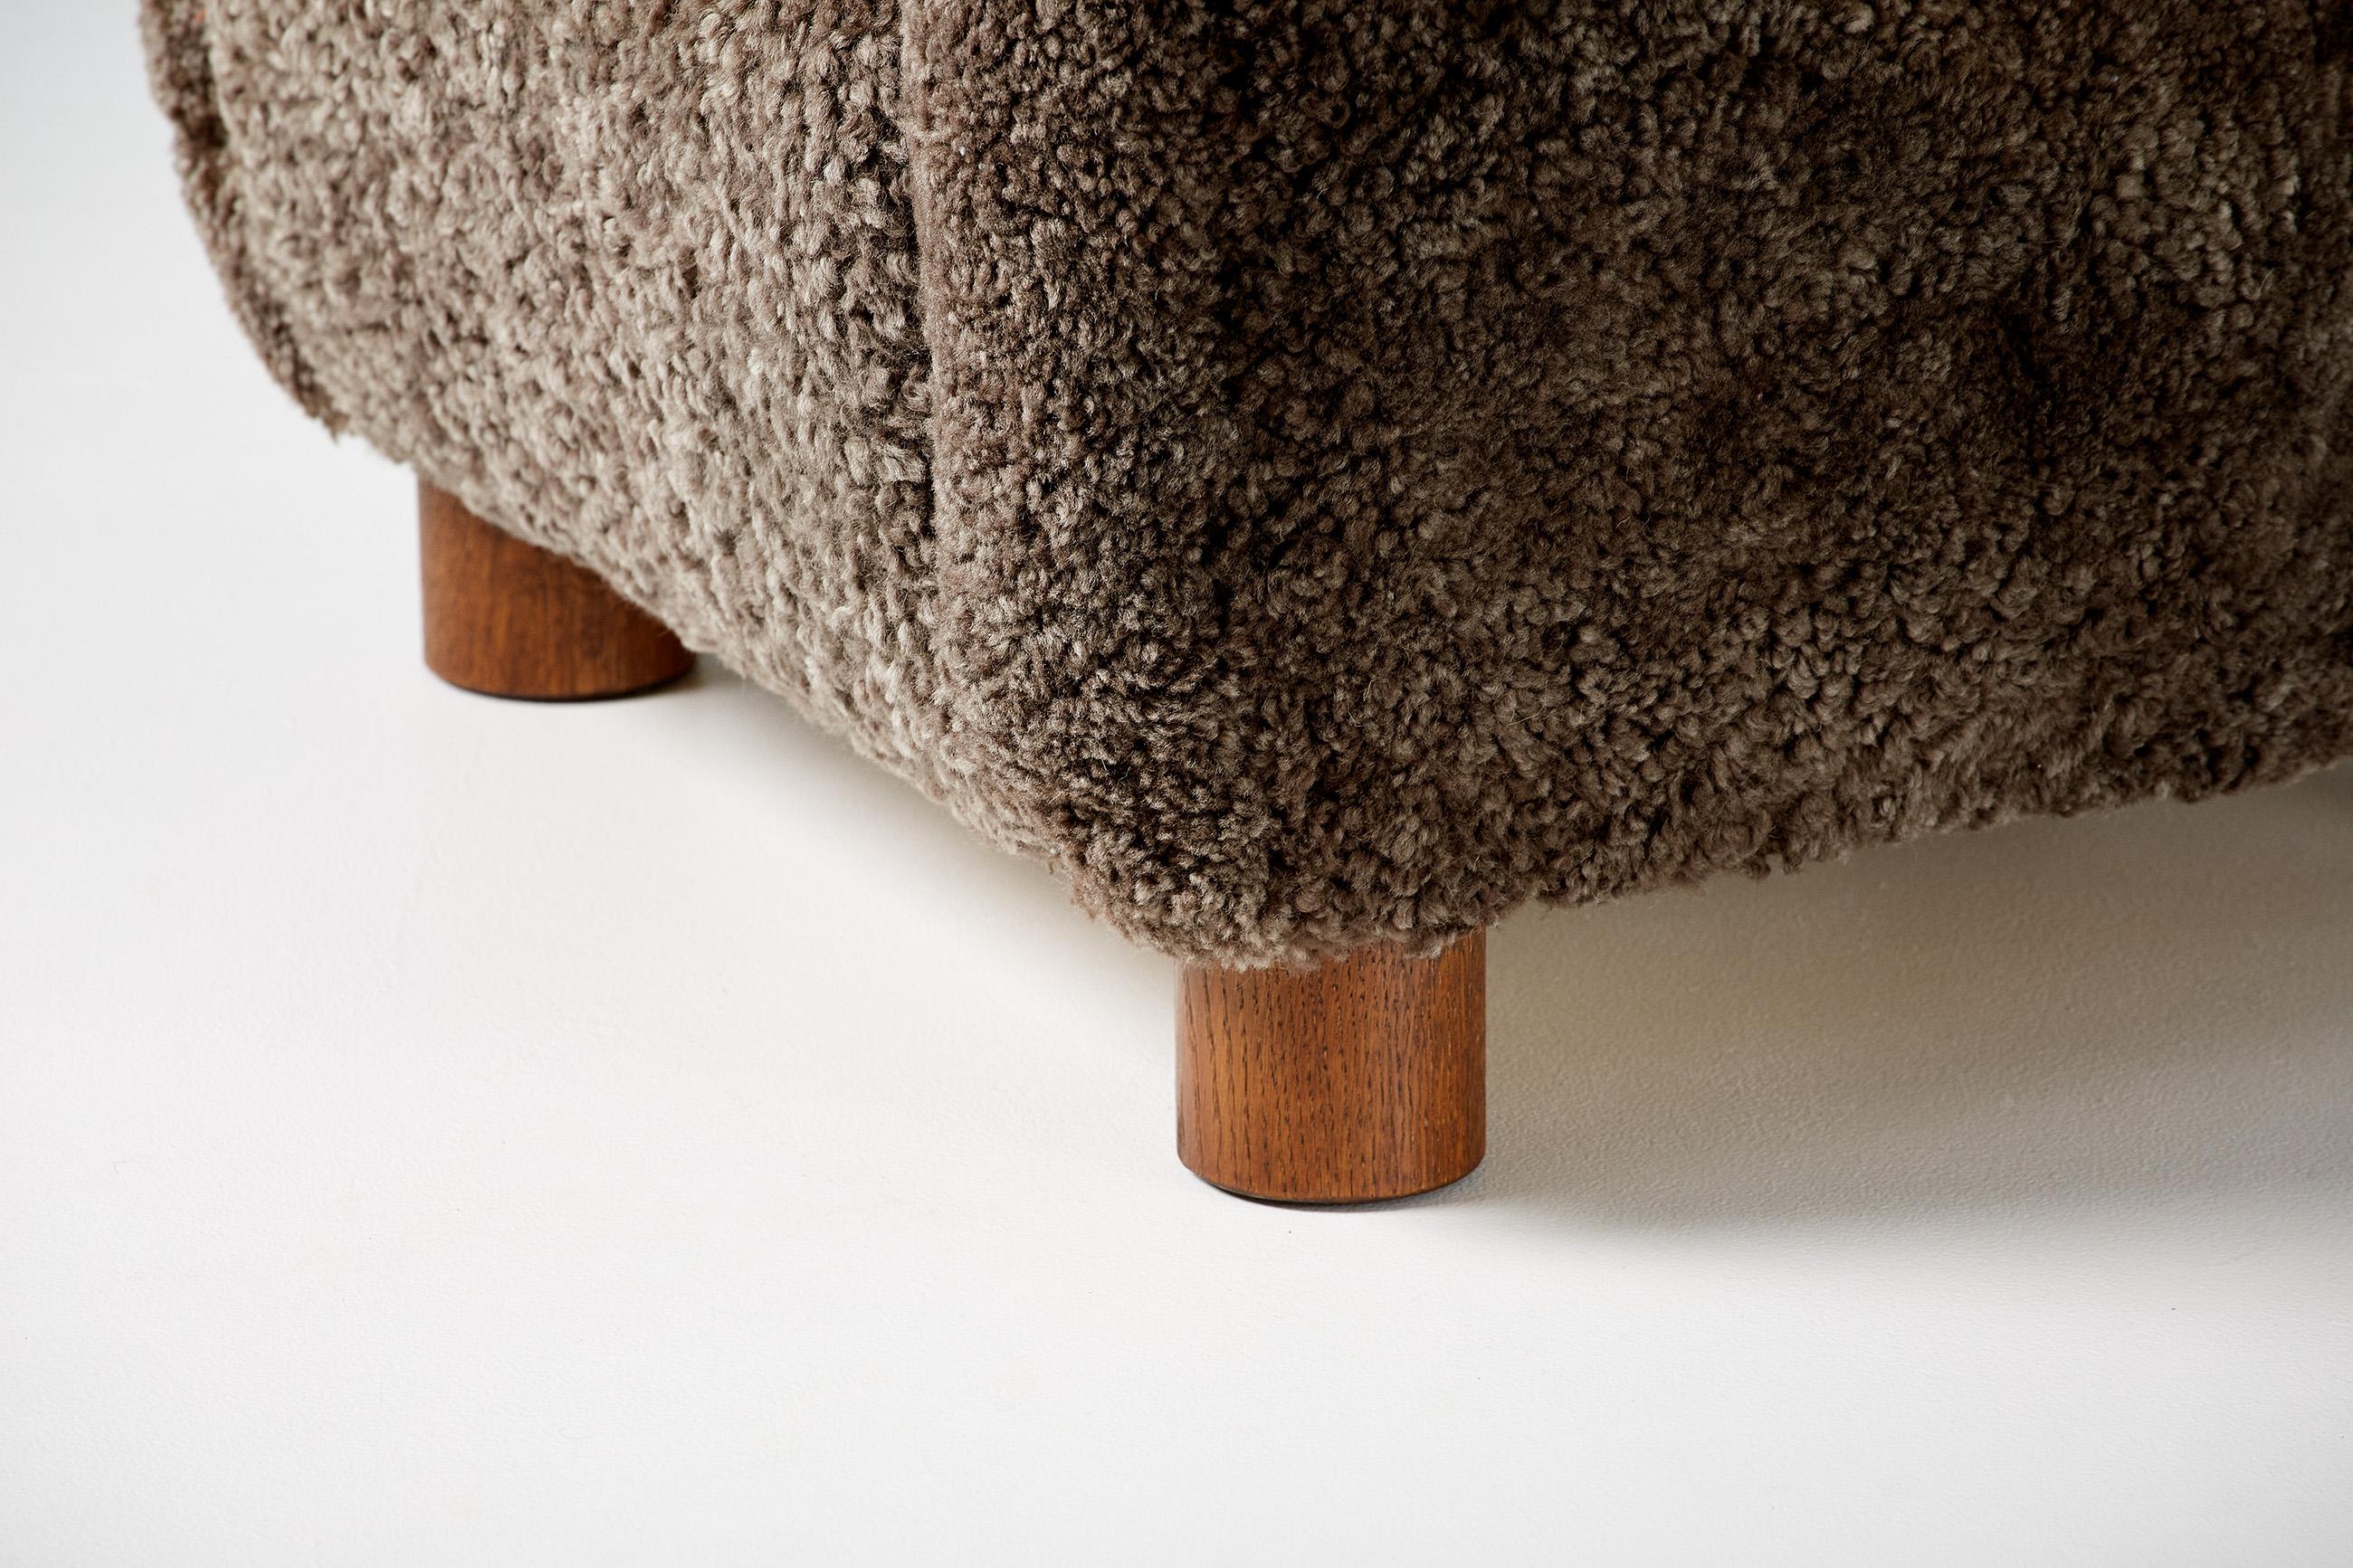 British Pair of Custom Made Sheepskin Lounge Chairs For Sale